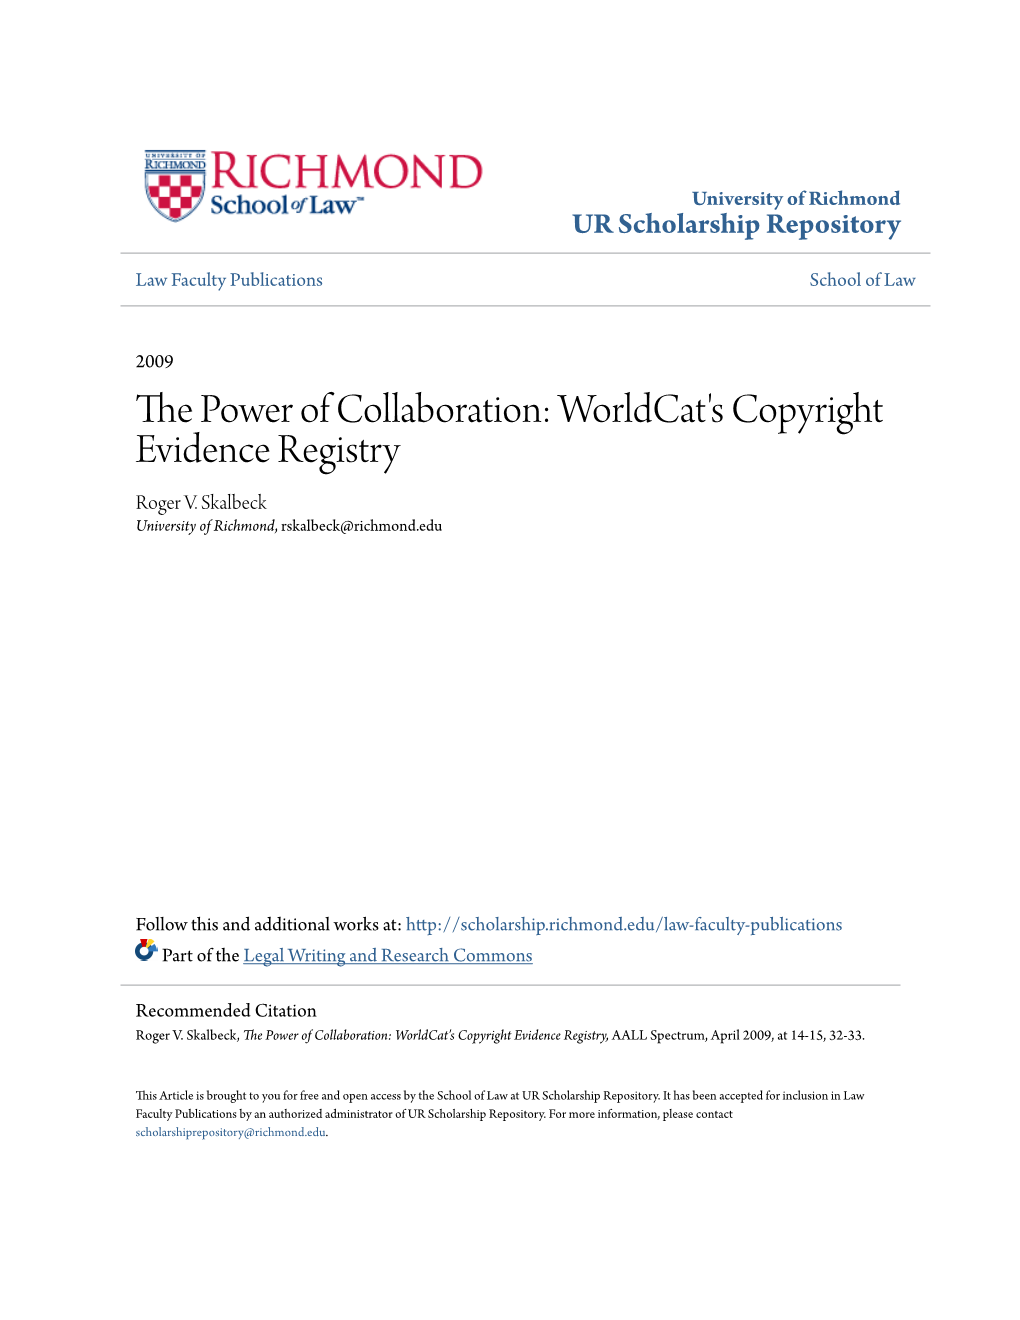 Worldcat's Copyright Evidence Registry Roger V